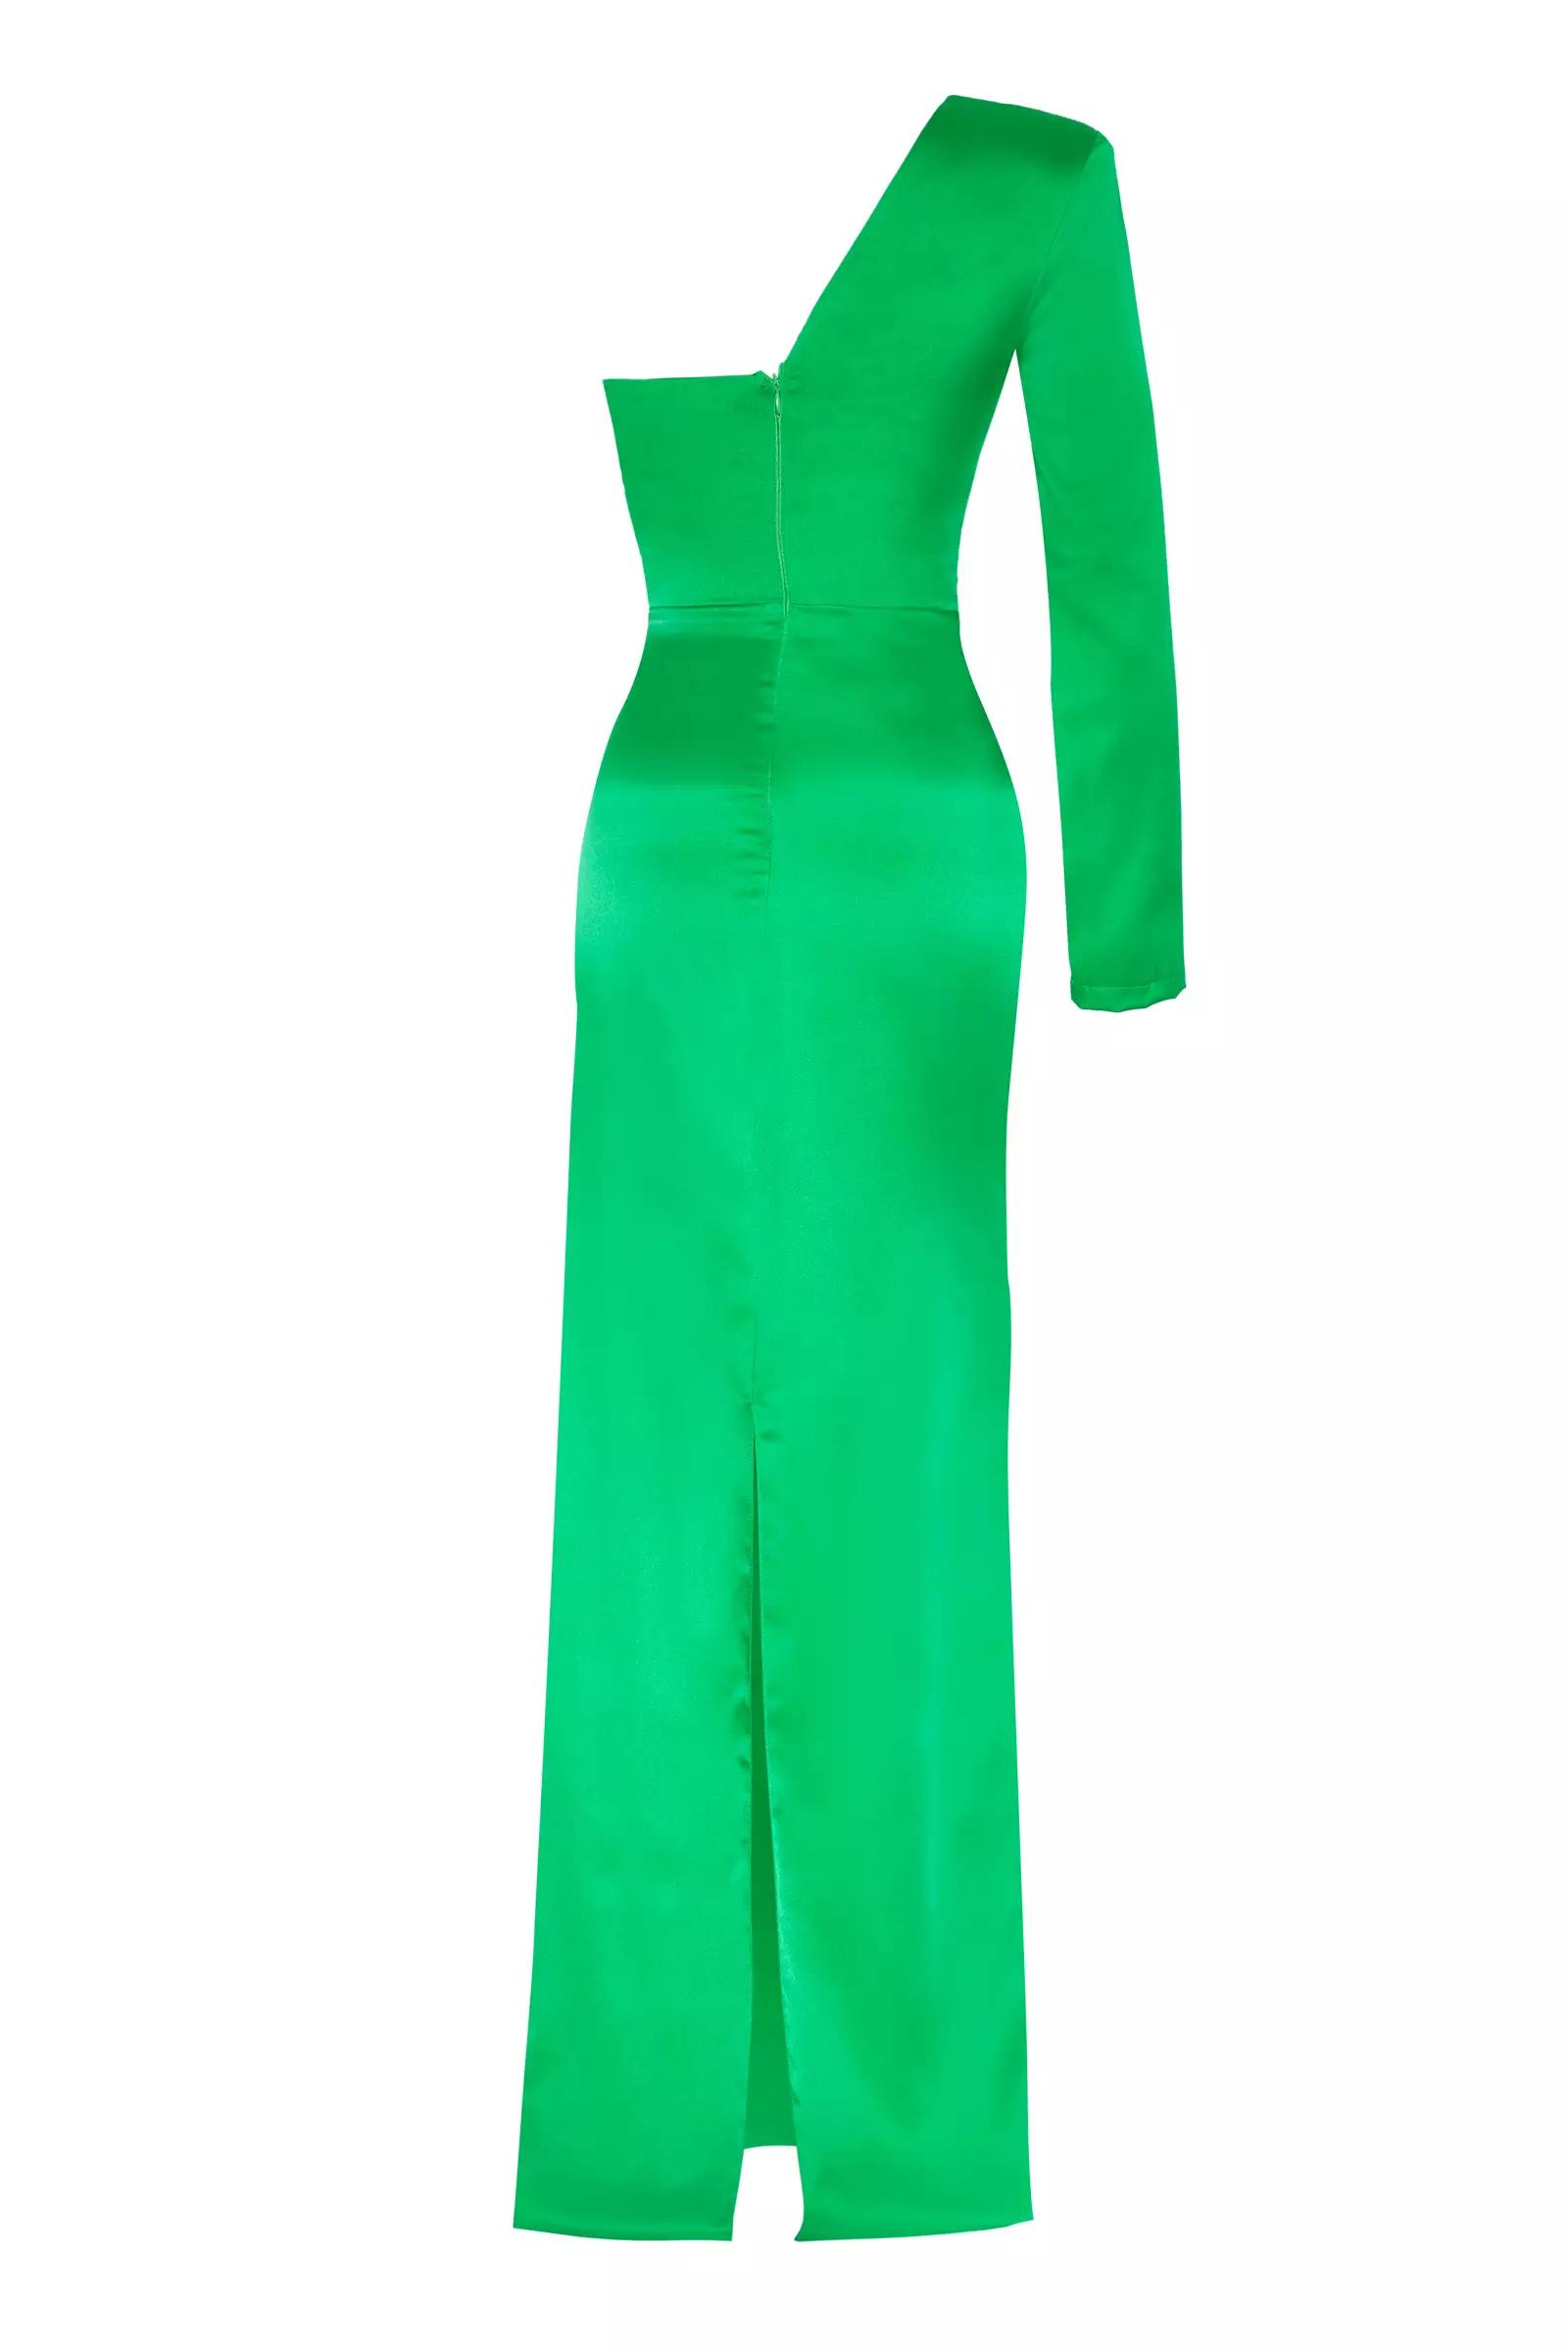 Green satin one arm long dress